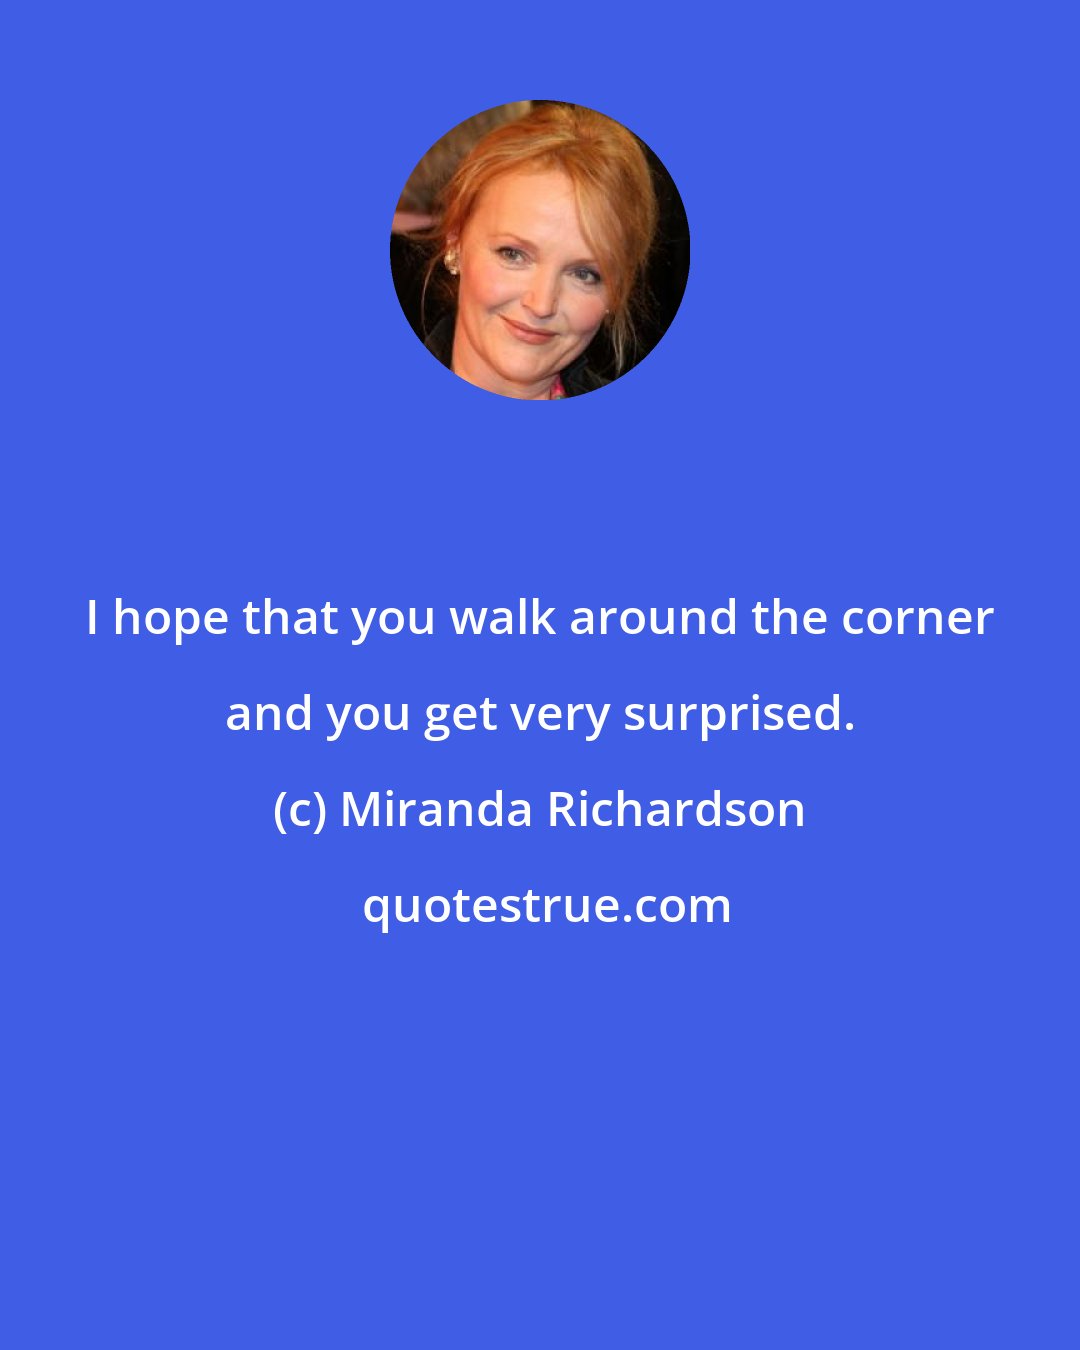 Miranda Richardson: I hope that you walk around the corner and you get very surprised.